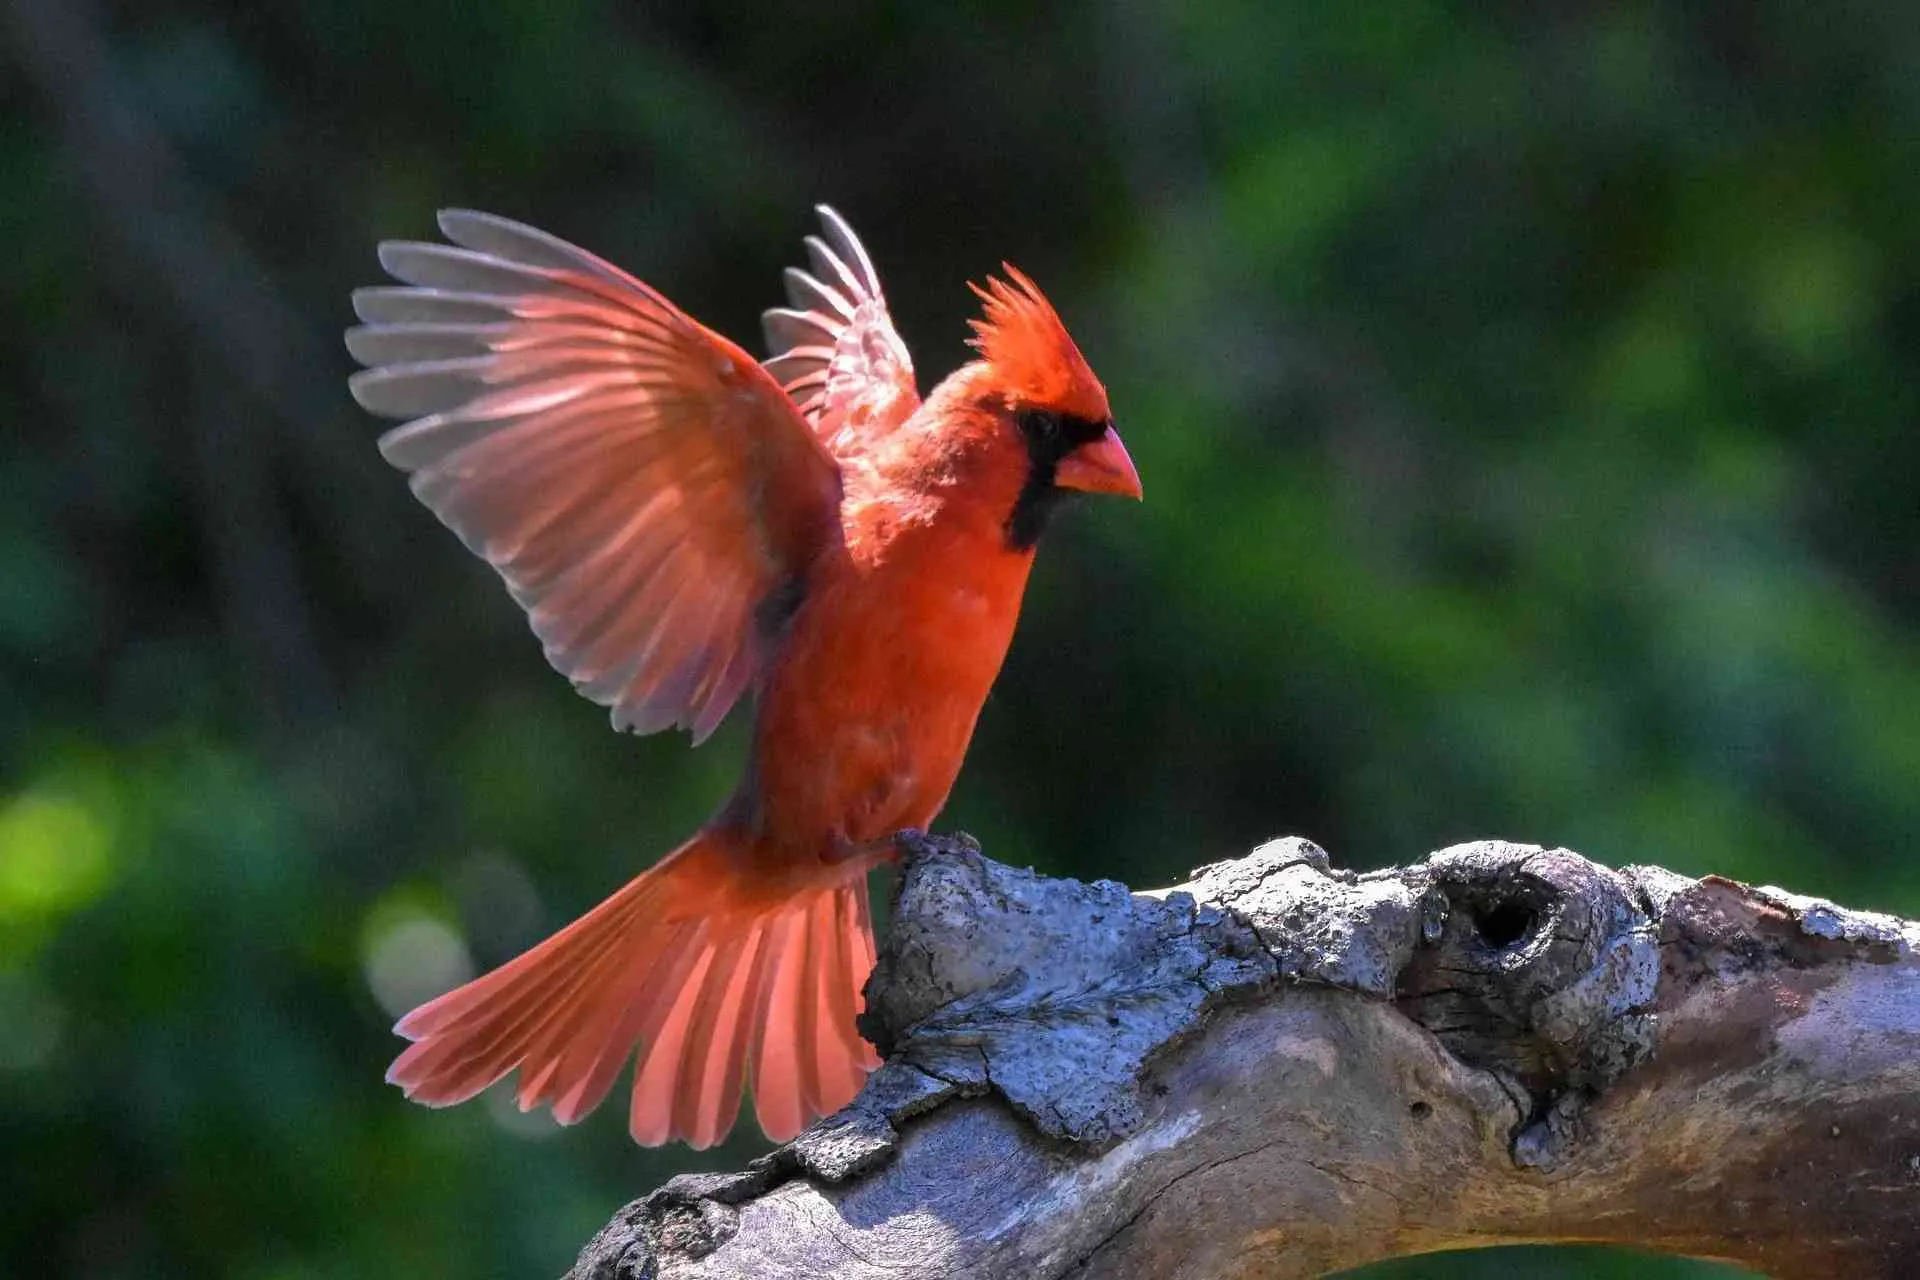 The northern cardinal is a fascinating bird with an orange beak.